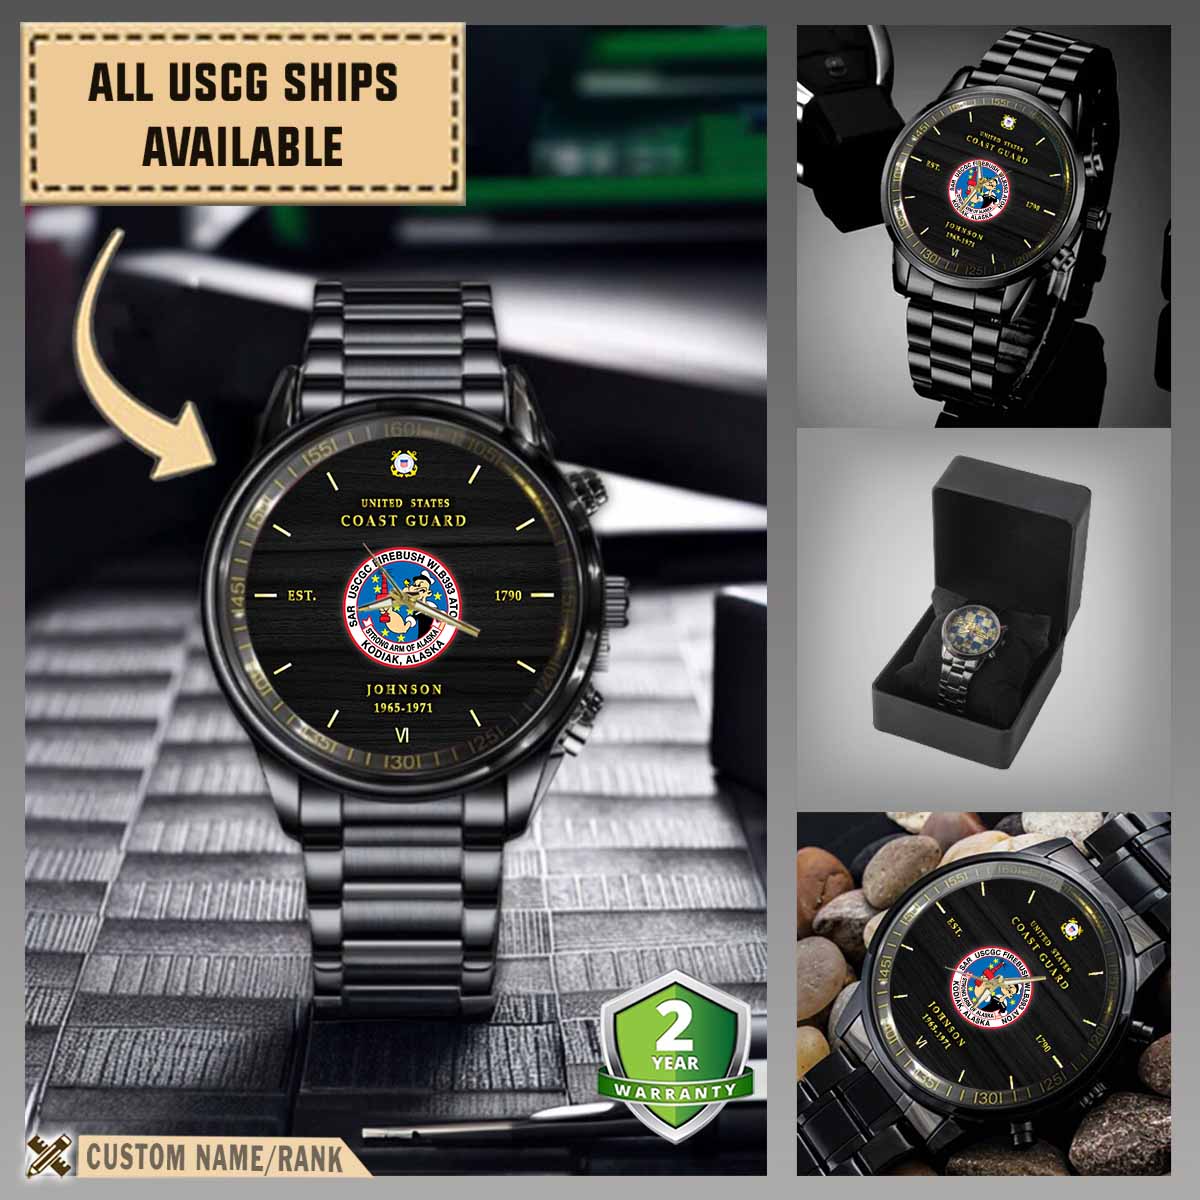 uscgc firebush wlb 393military black wrist watch qo9su